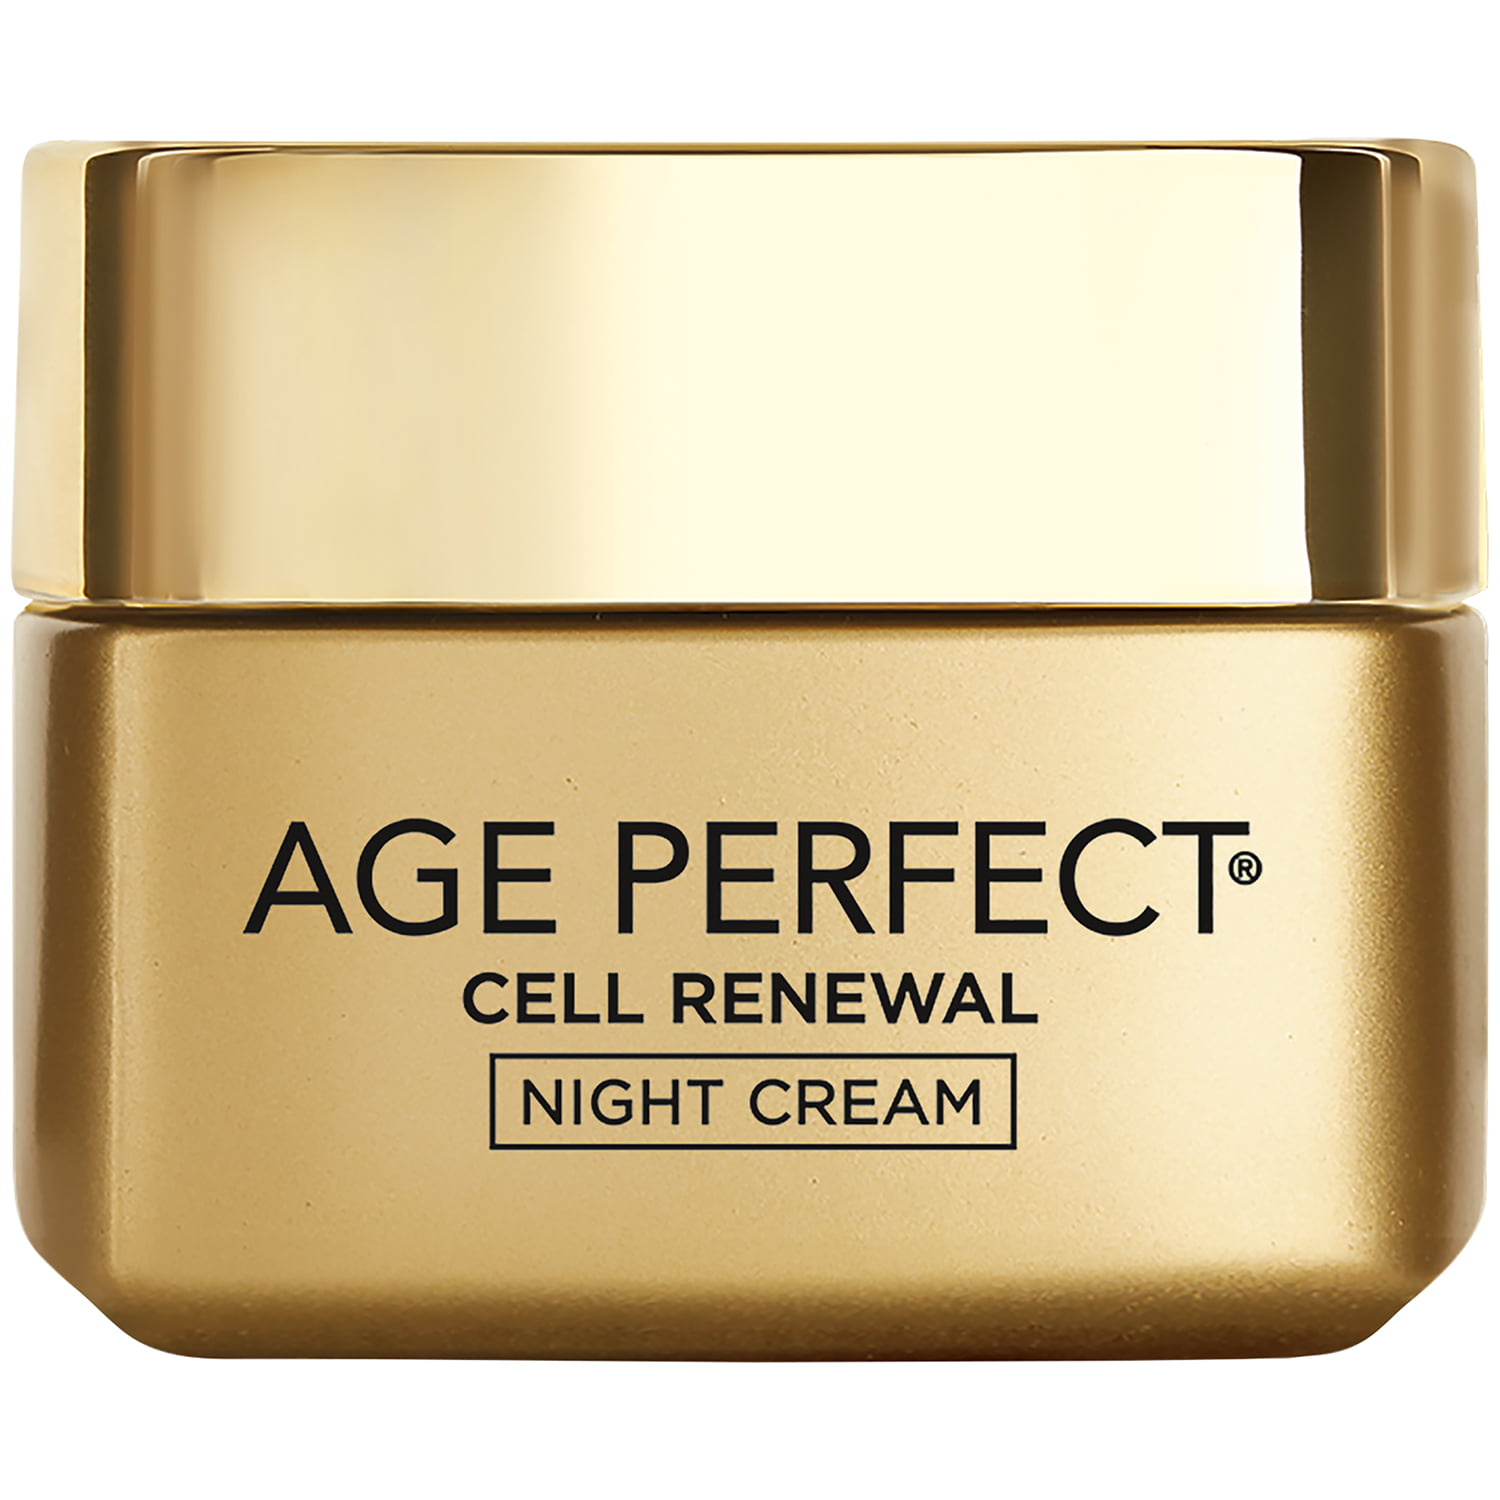 L'Oreal Paris Age Perfect Cell Renewal Night Cream, 1.7 oz - image 1 of 19